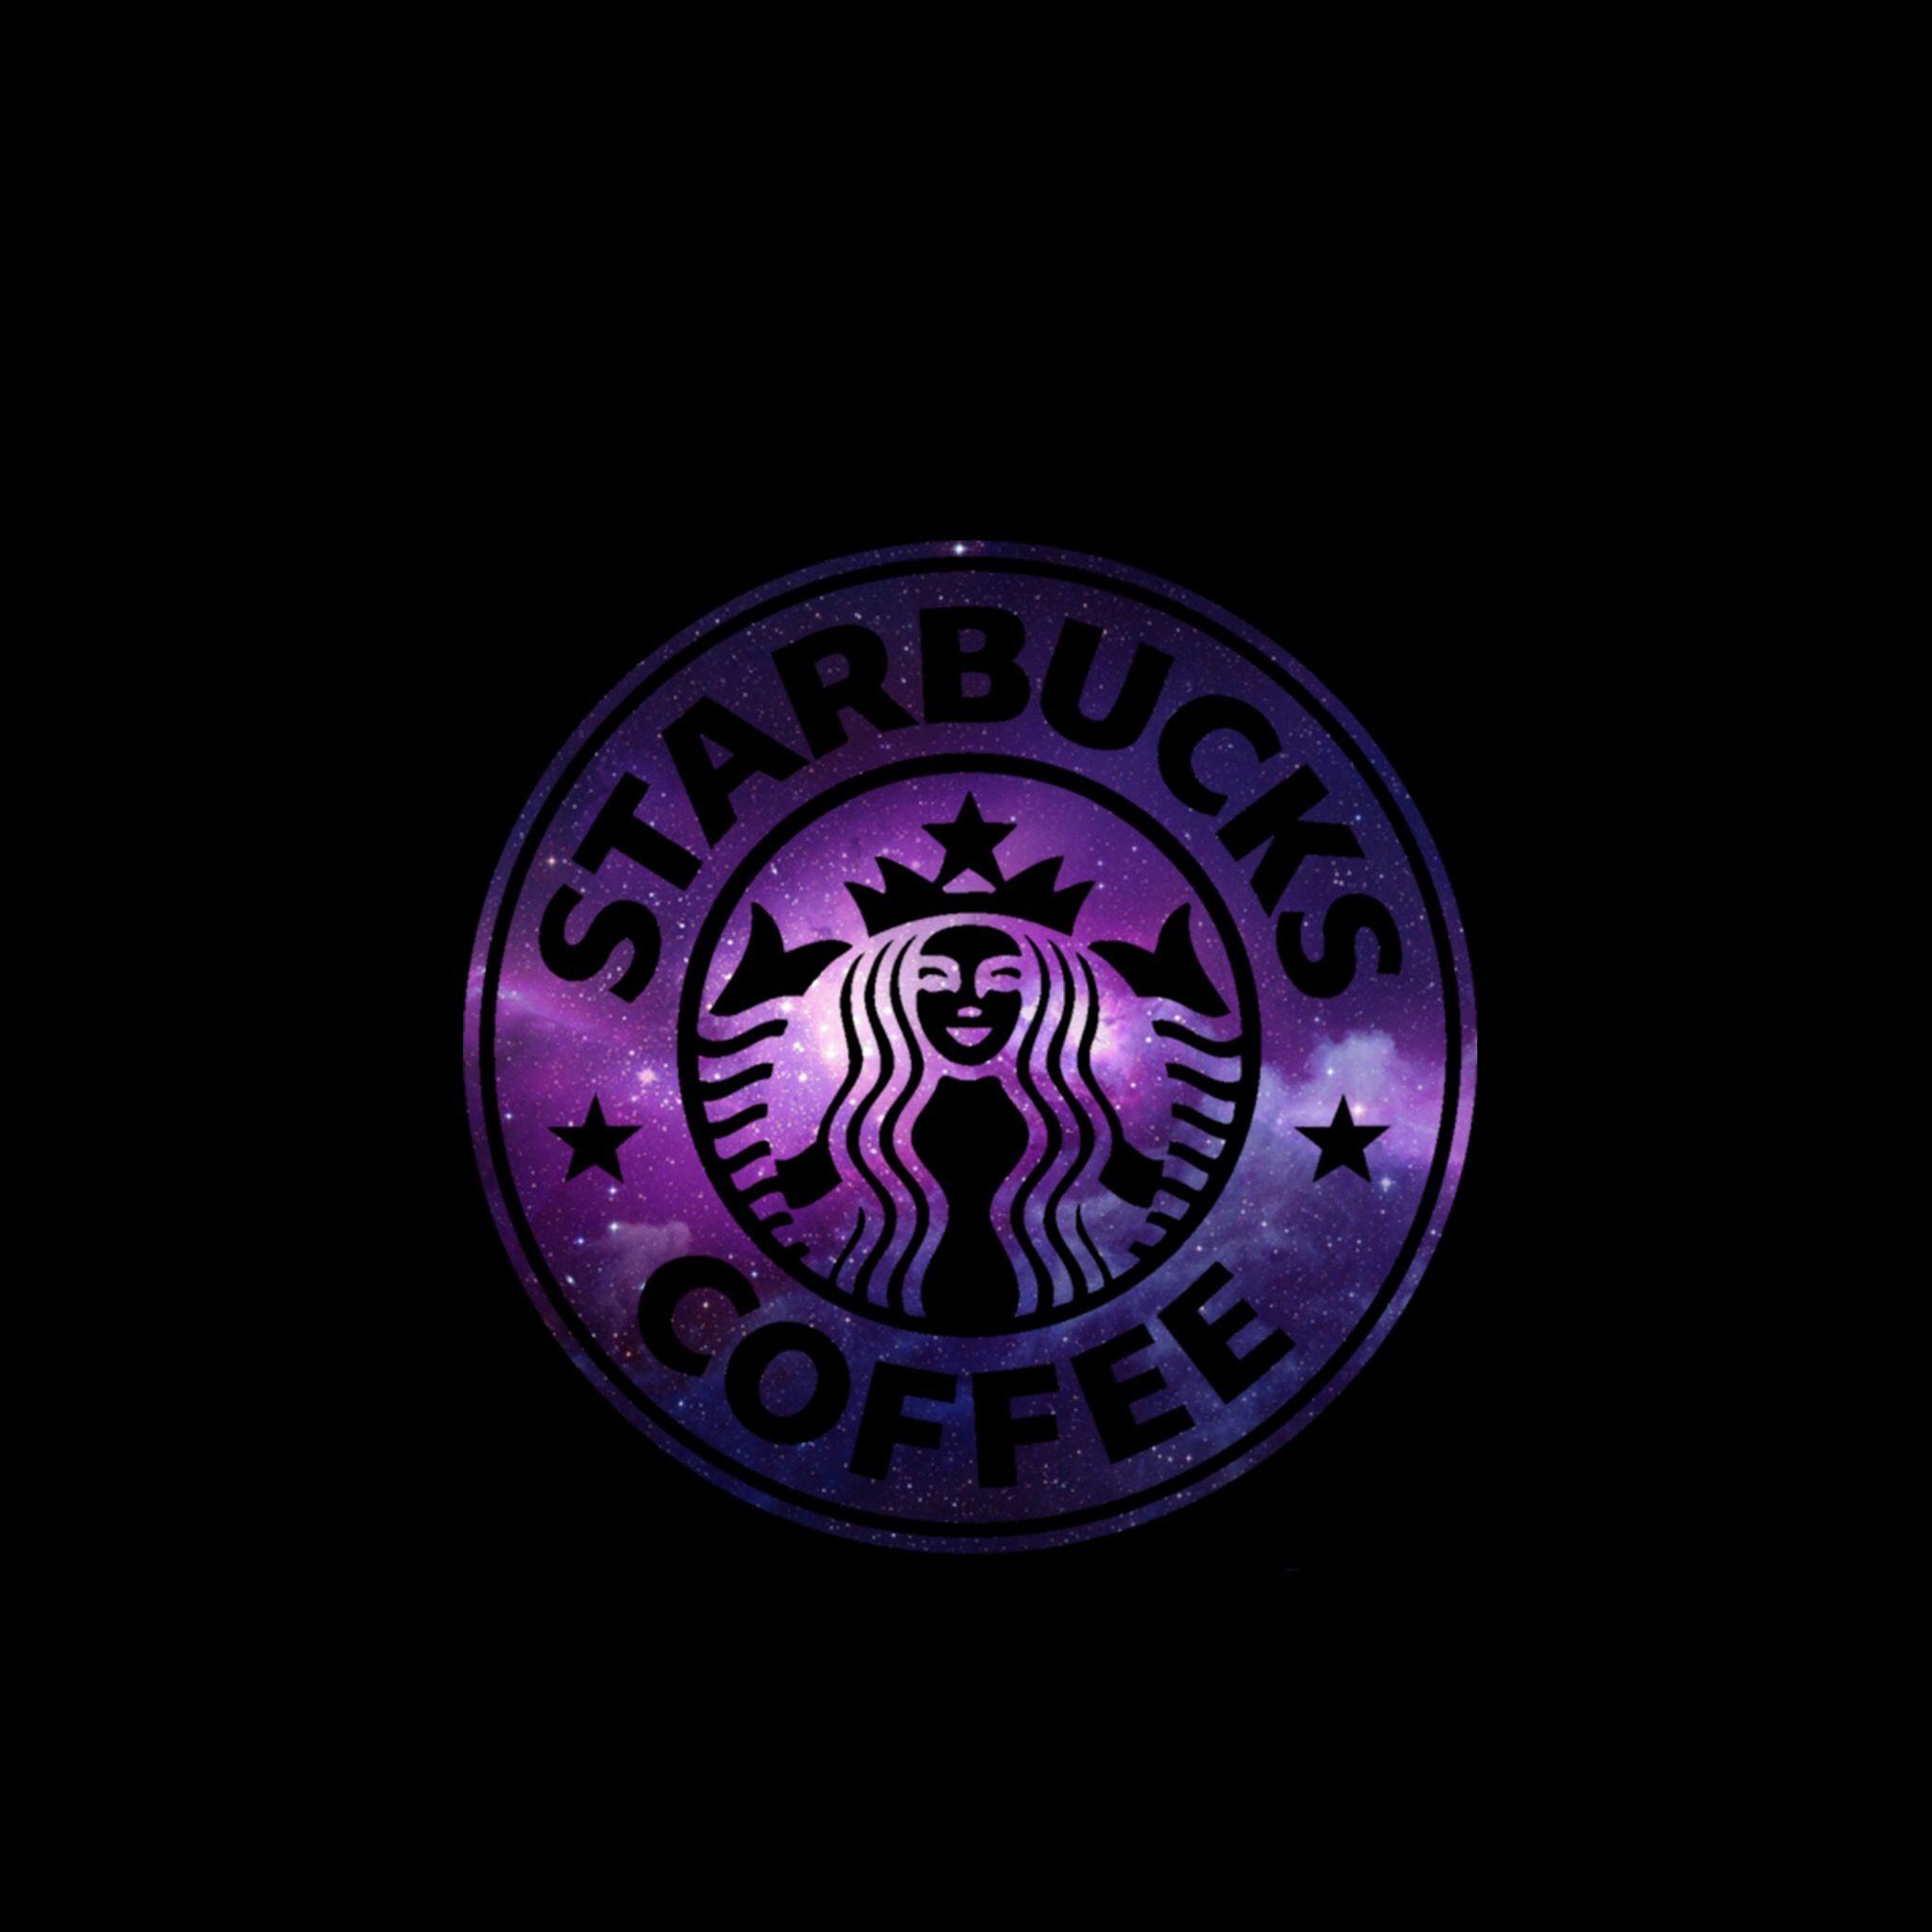 Starbucks Galaxy Wallpapers Top Free Starbucks Galaxy Backgrounds Wallpaperaccess 7087